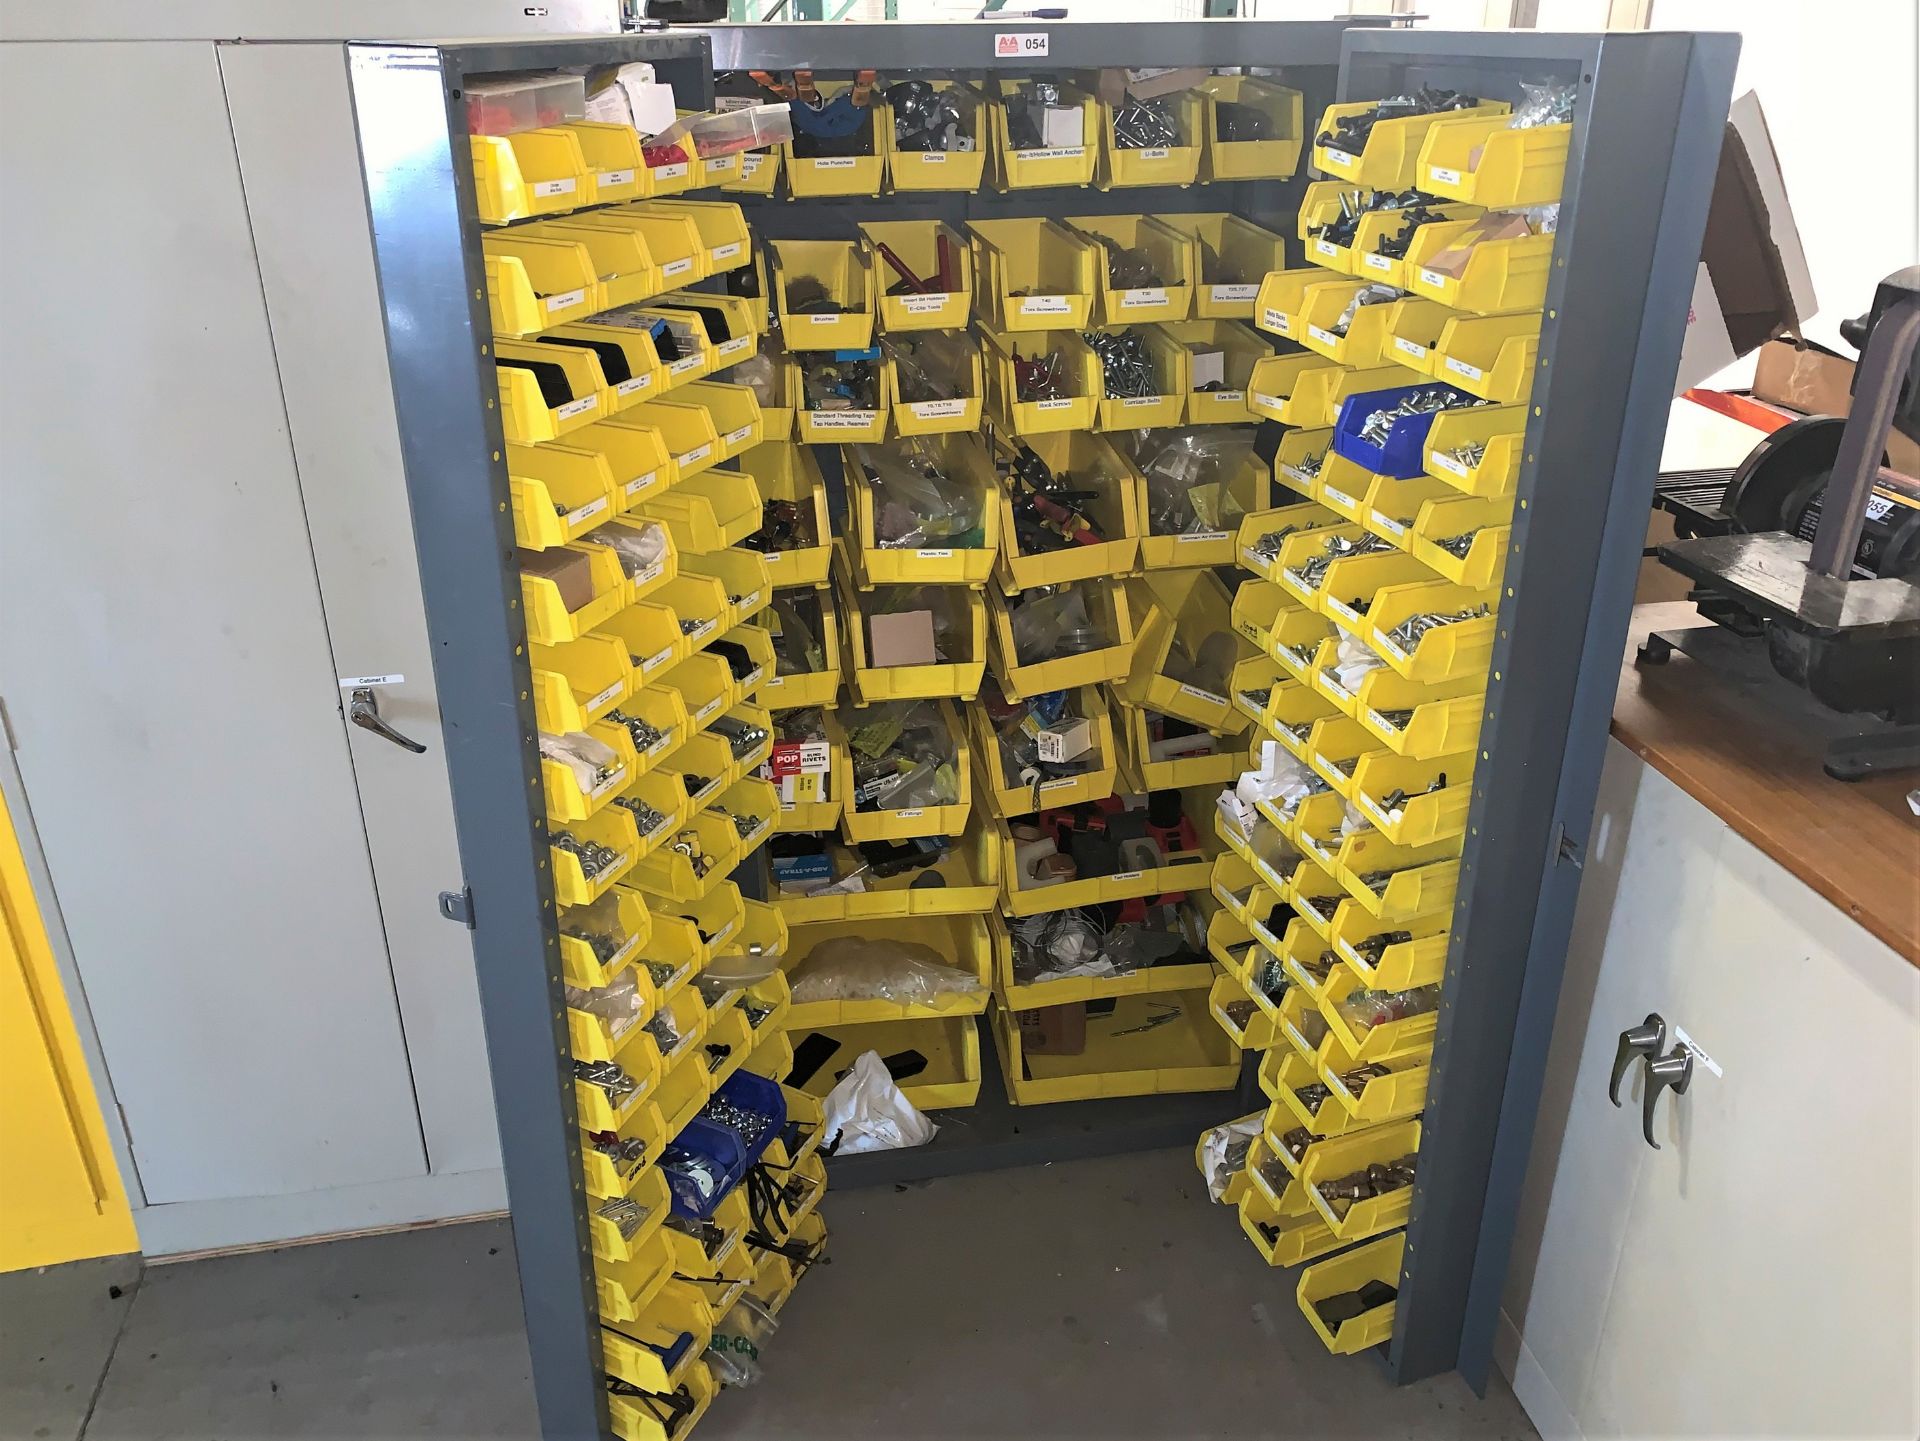 Metal 2-Door Storage Cabinet with Contents including Bins and Parts